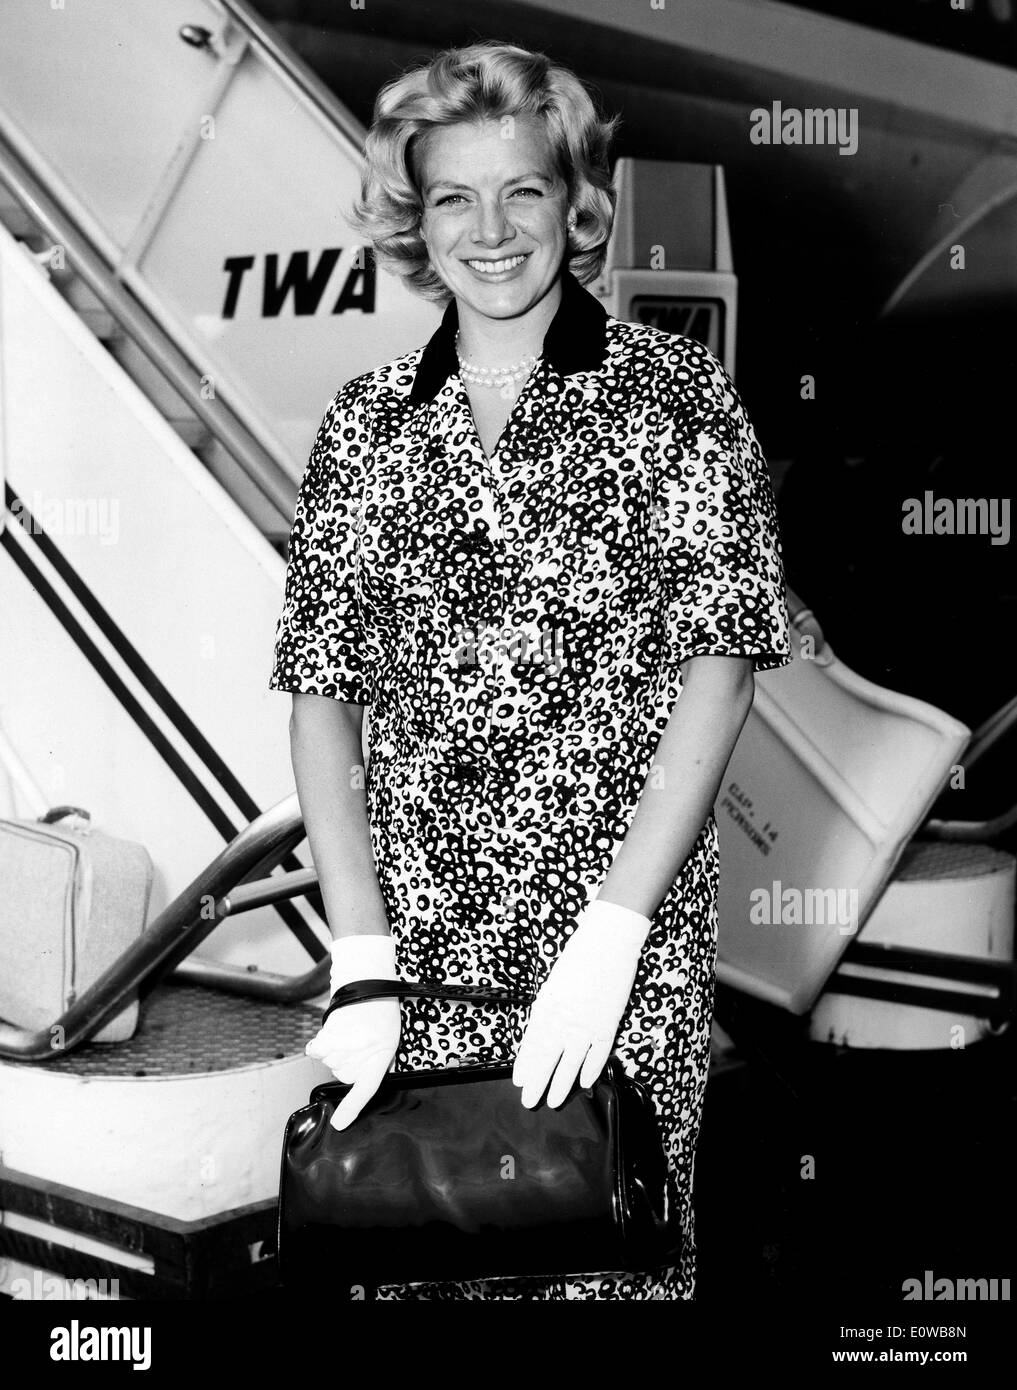 Rosemary Clooney immer bereit, an Bord eines Flugzeugs Stockfoto